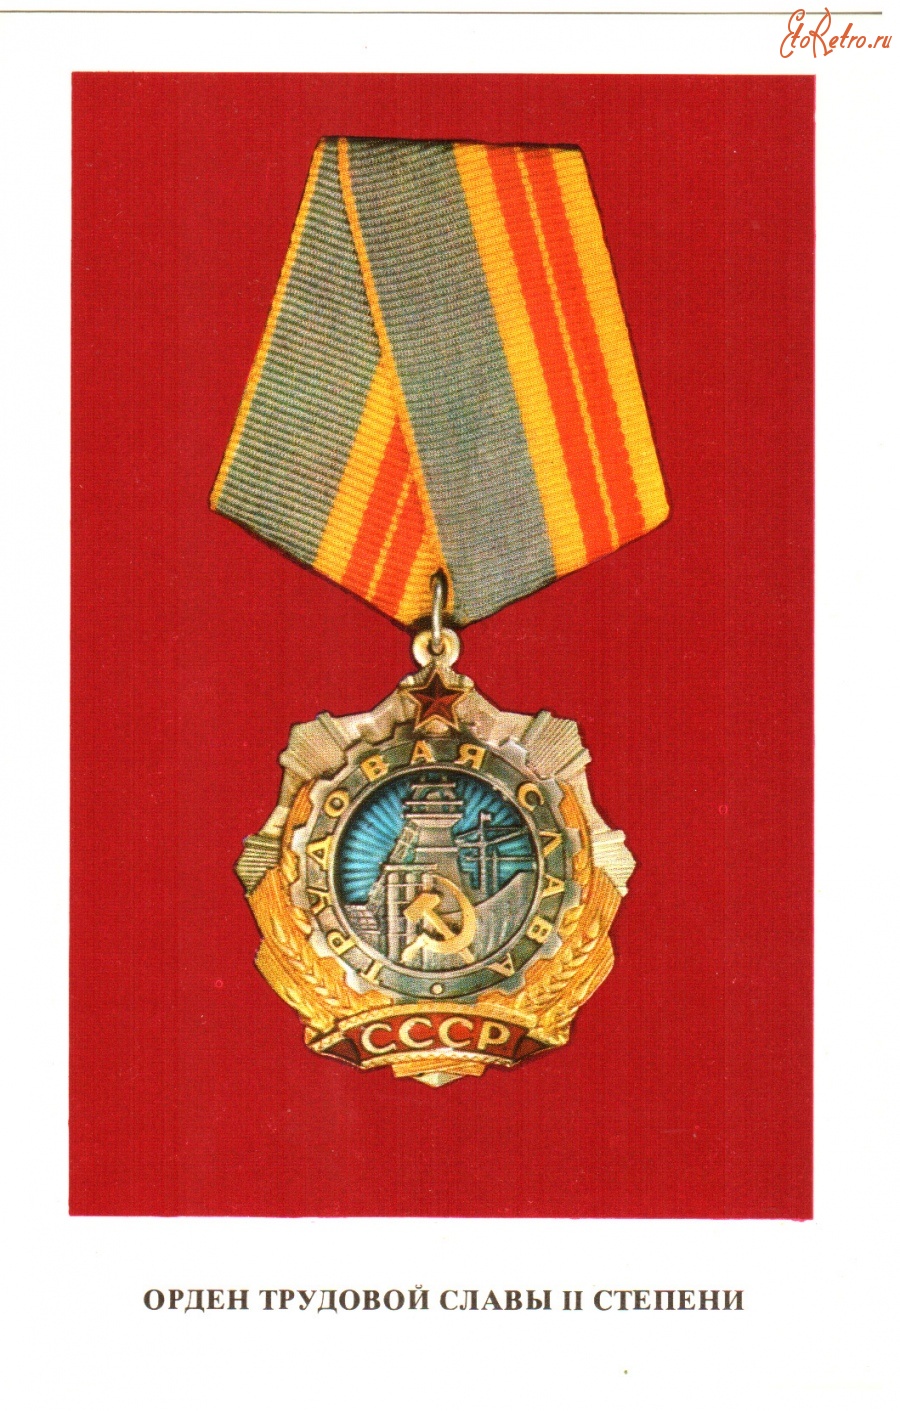 Ретро открытки - Орден Трудовой славы II степени